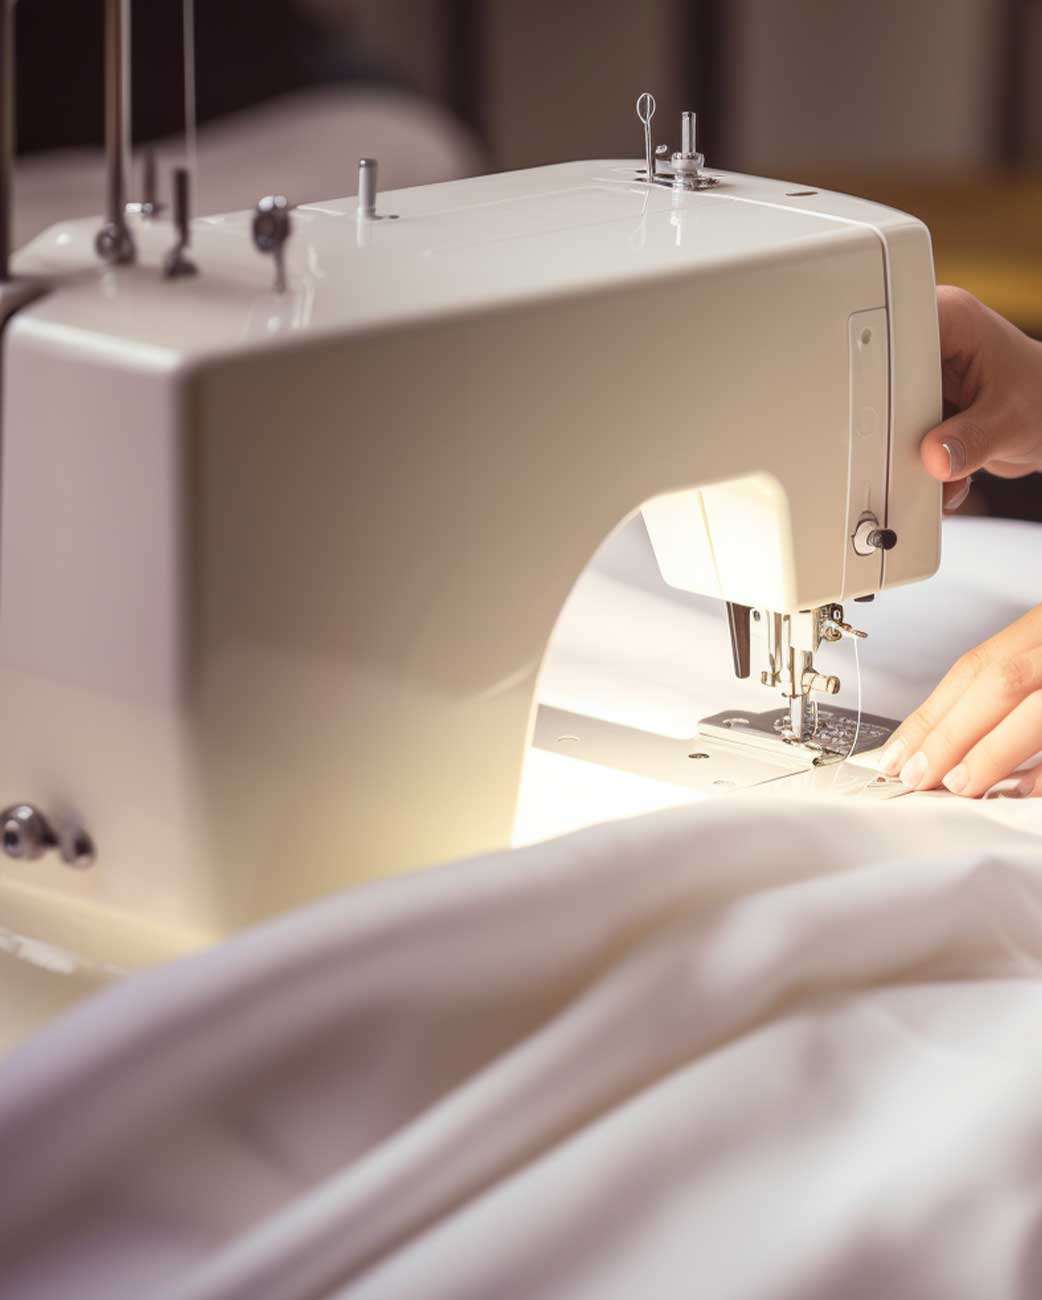 Devon Duvets artisan sewing machine crafting high-quality bedding.